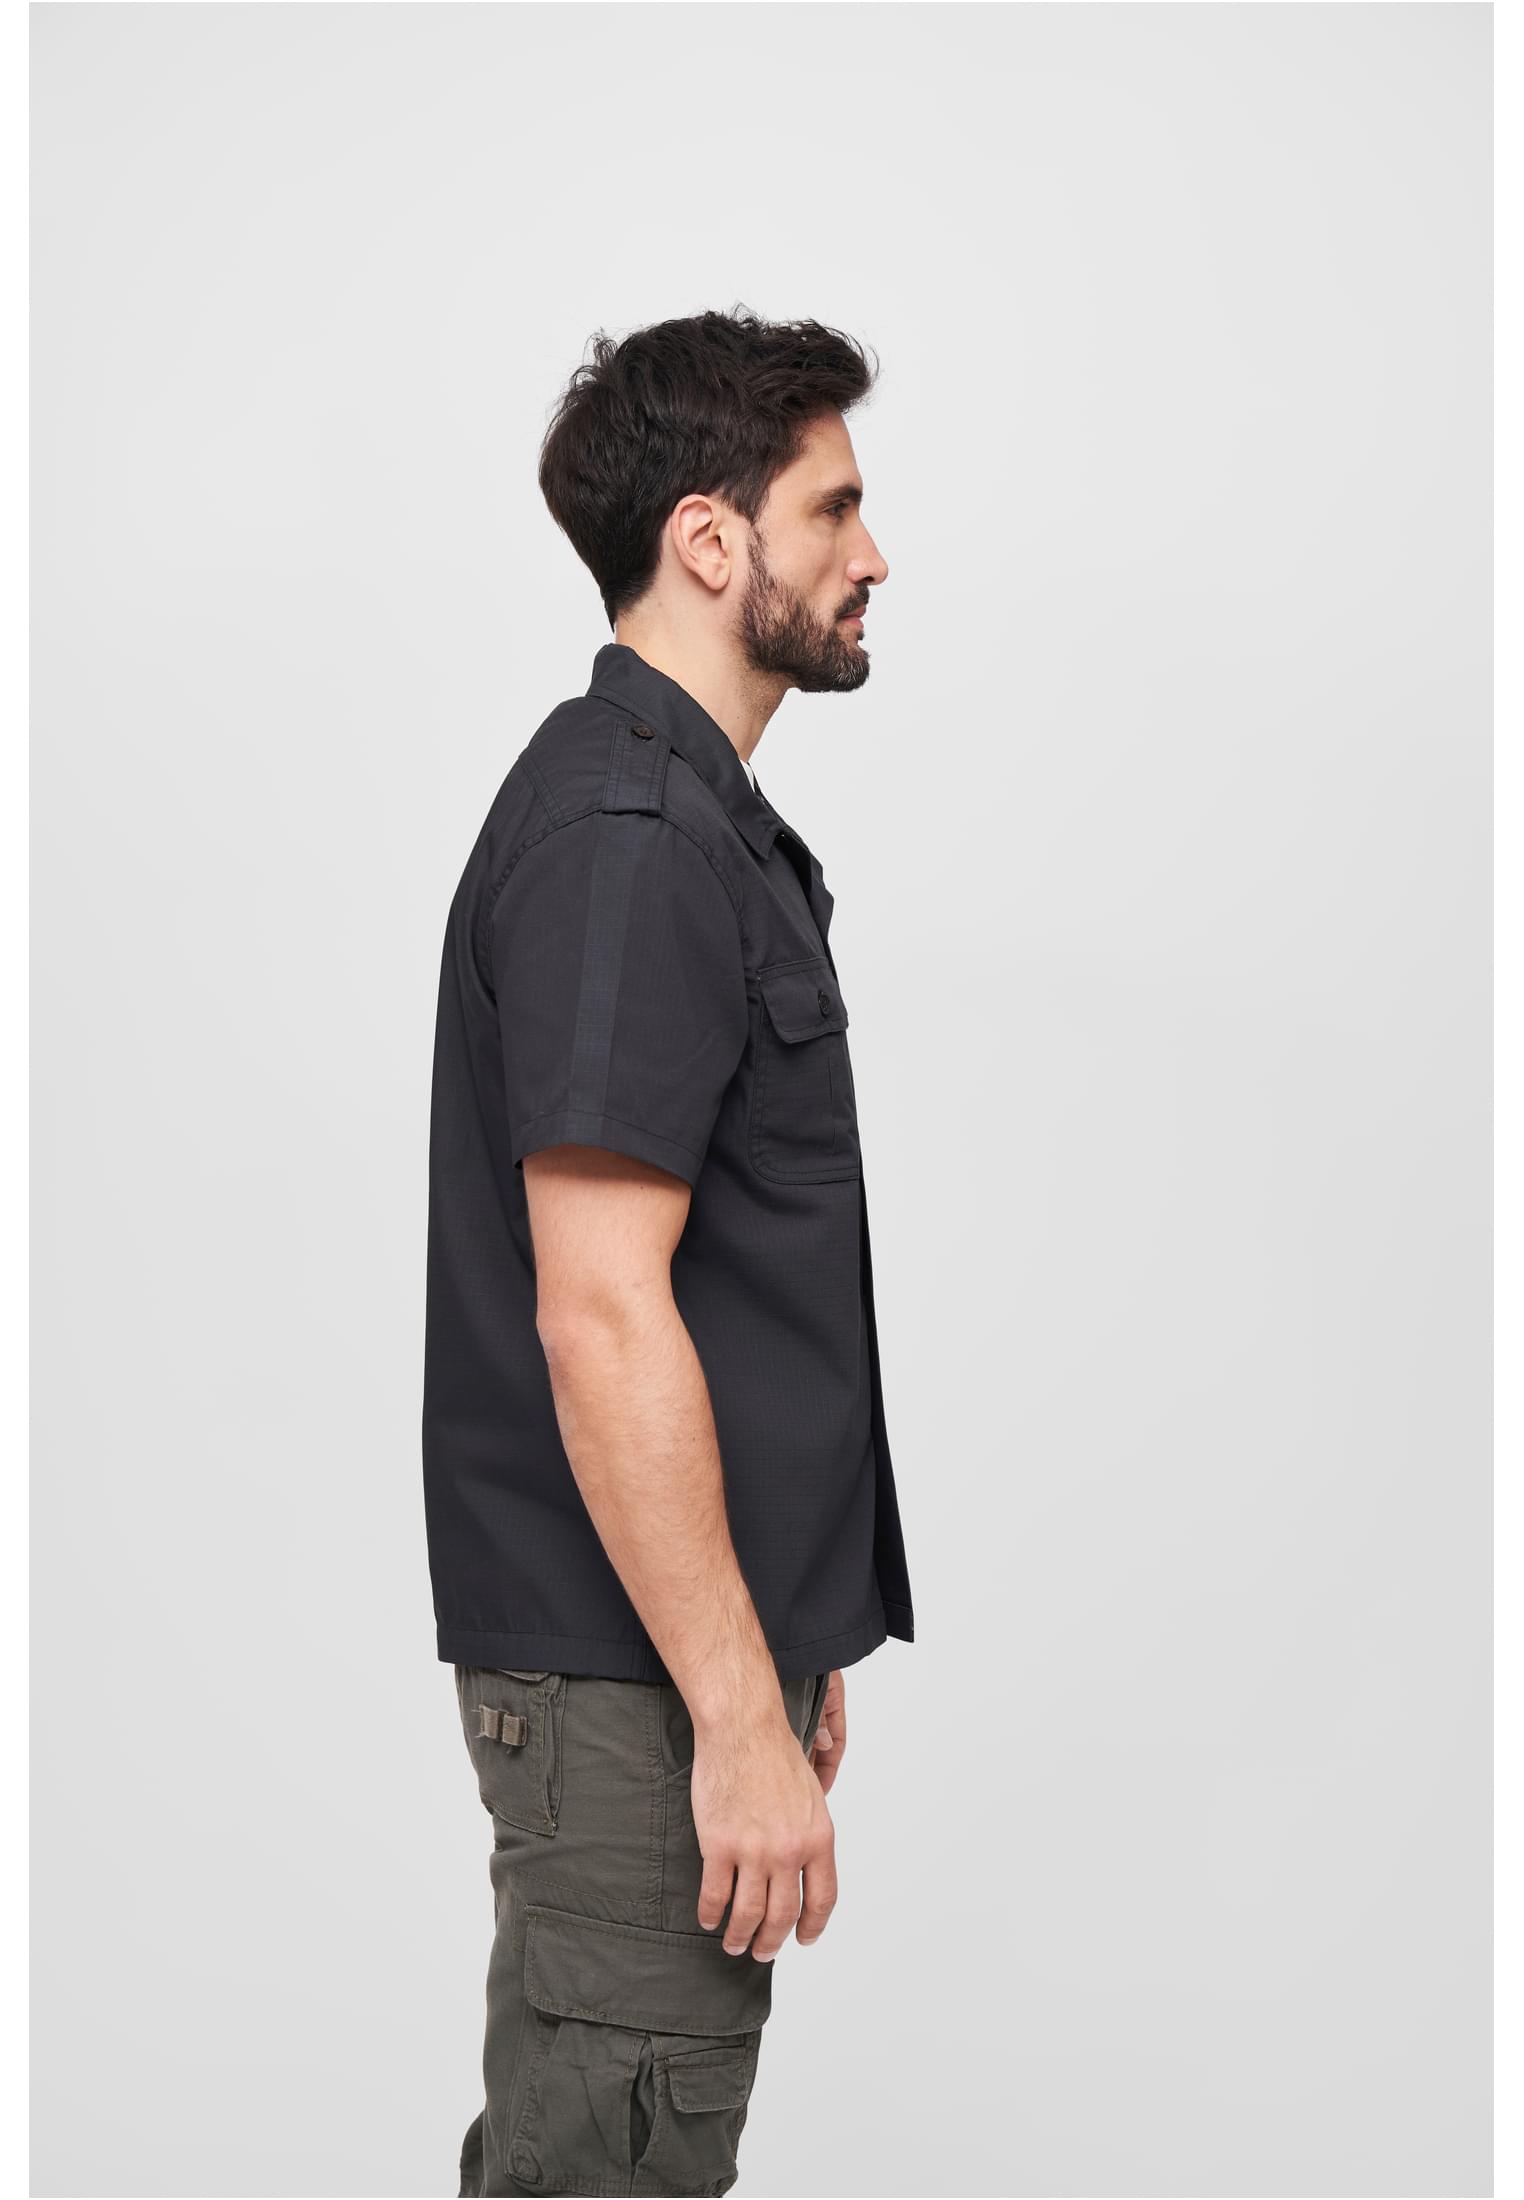 Hemden US Shirt Ripstop shortsleeve in Farbe black